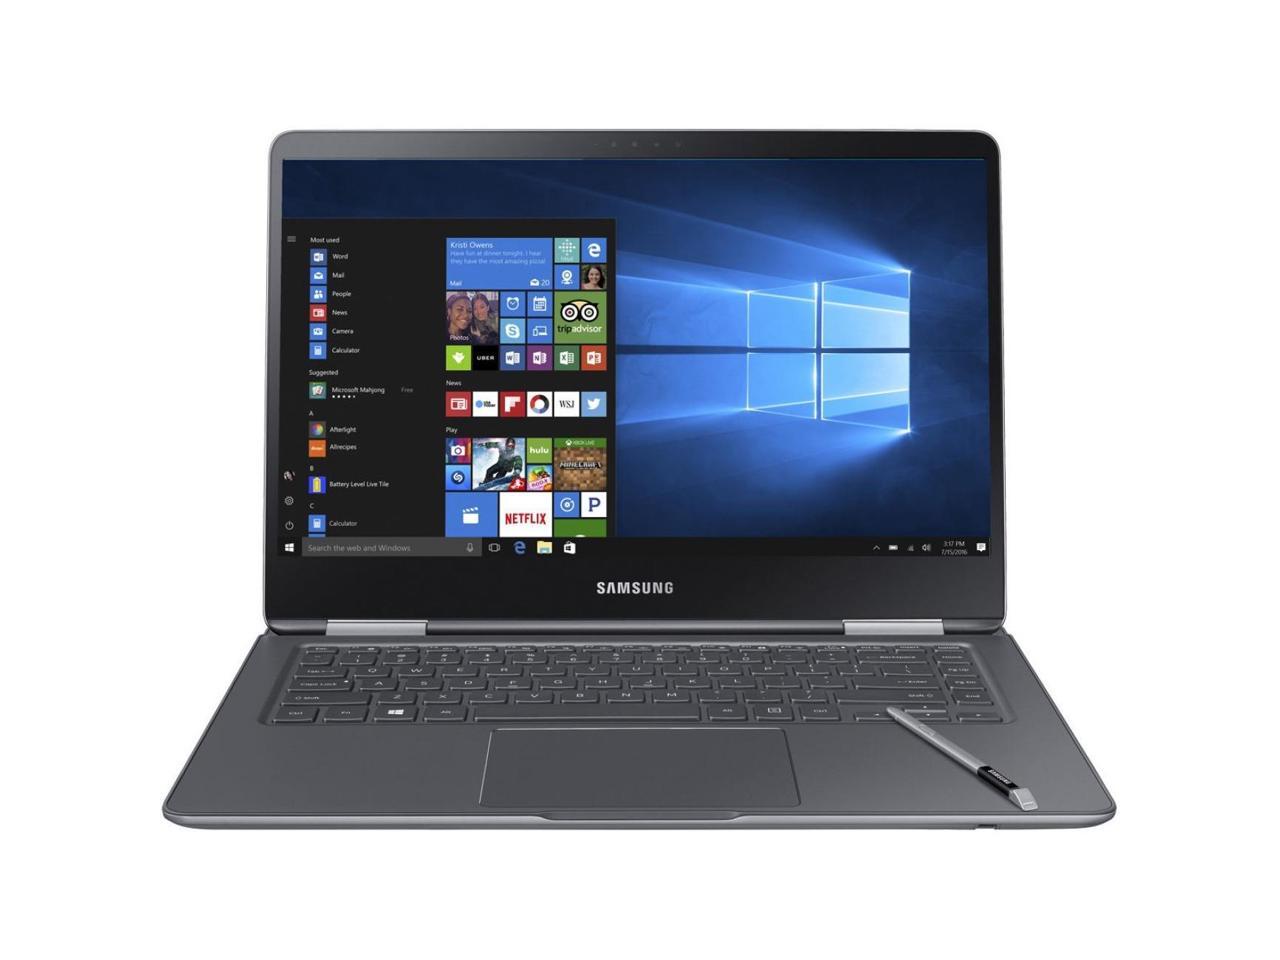 Samsung Notebook 9 Pro NP940X5N-X01US 15" FHD 2-in-1 Touchscreen Intel Core i7-8550U 1.80Ghz 16GB 256GB Webcam Windows 10 Pro